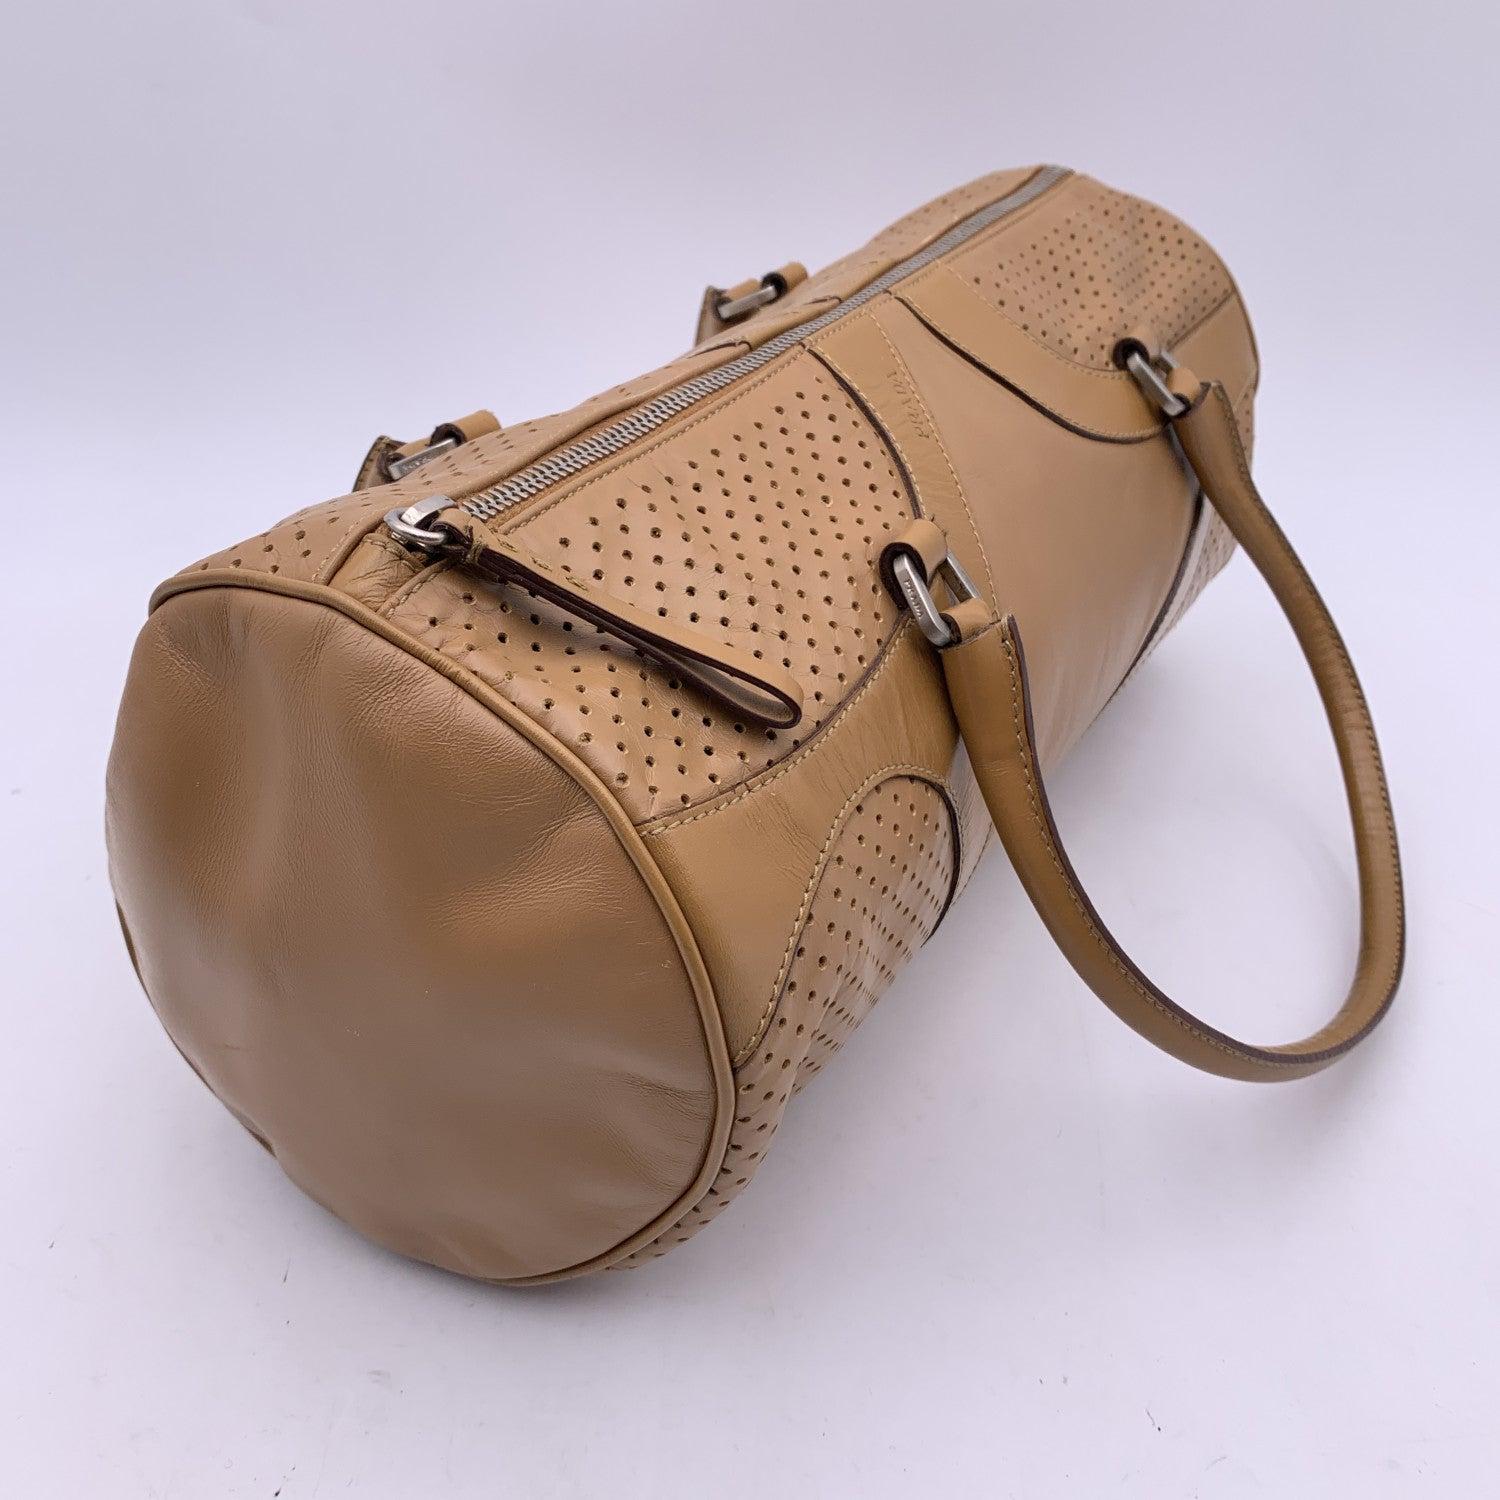 Prada Beige Leather Perforated Bowling Barrel Bag Handbag 4